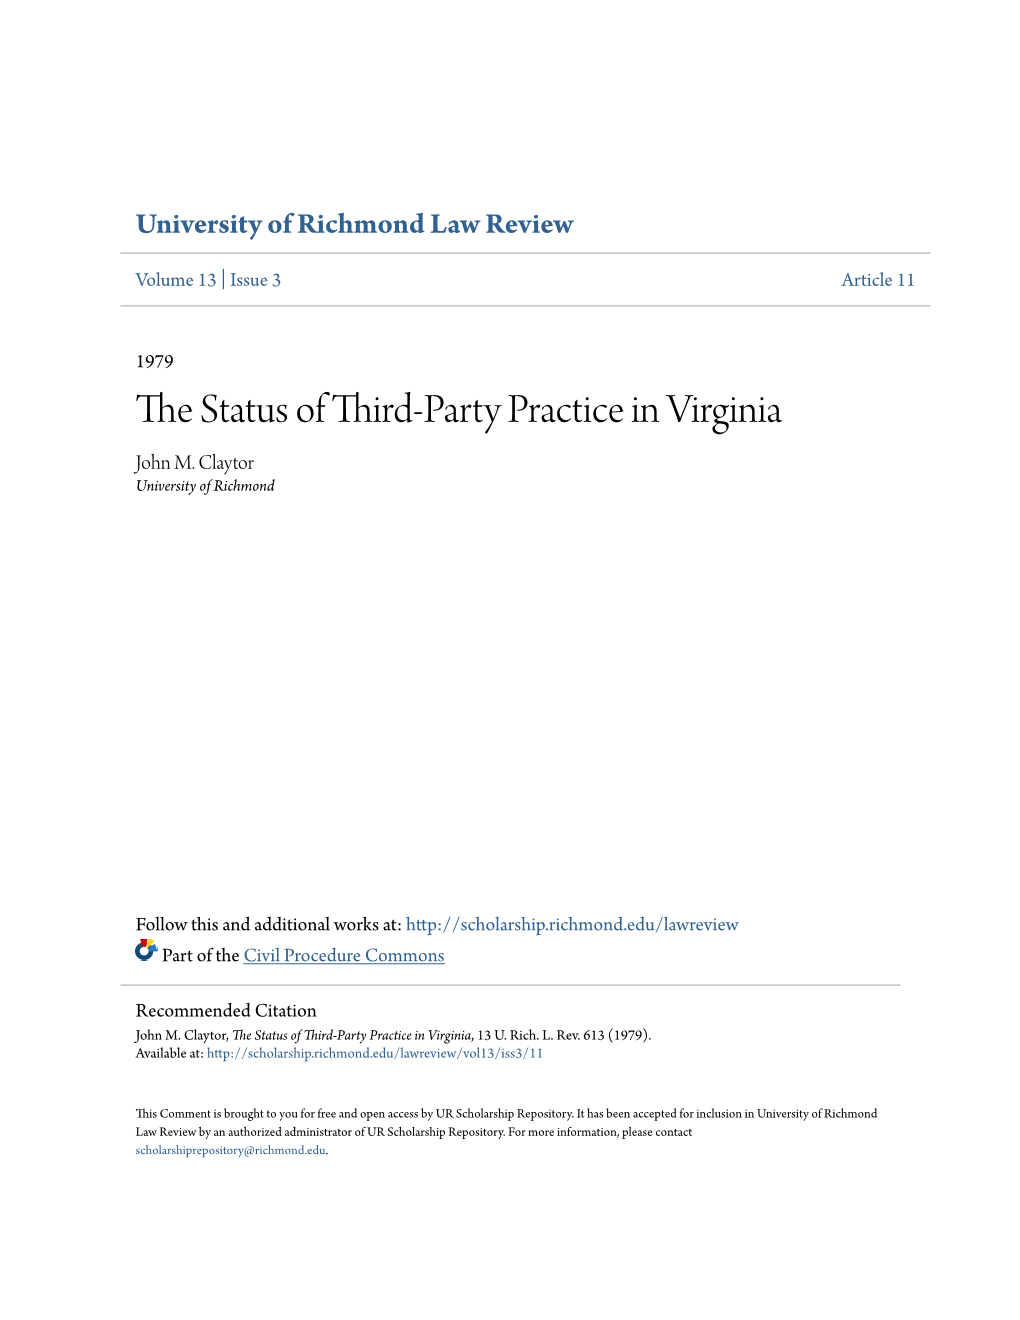 The Status of Third-Party Practice in Virginia, 13 U